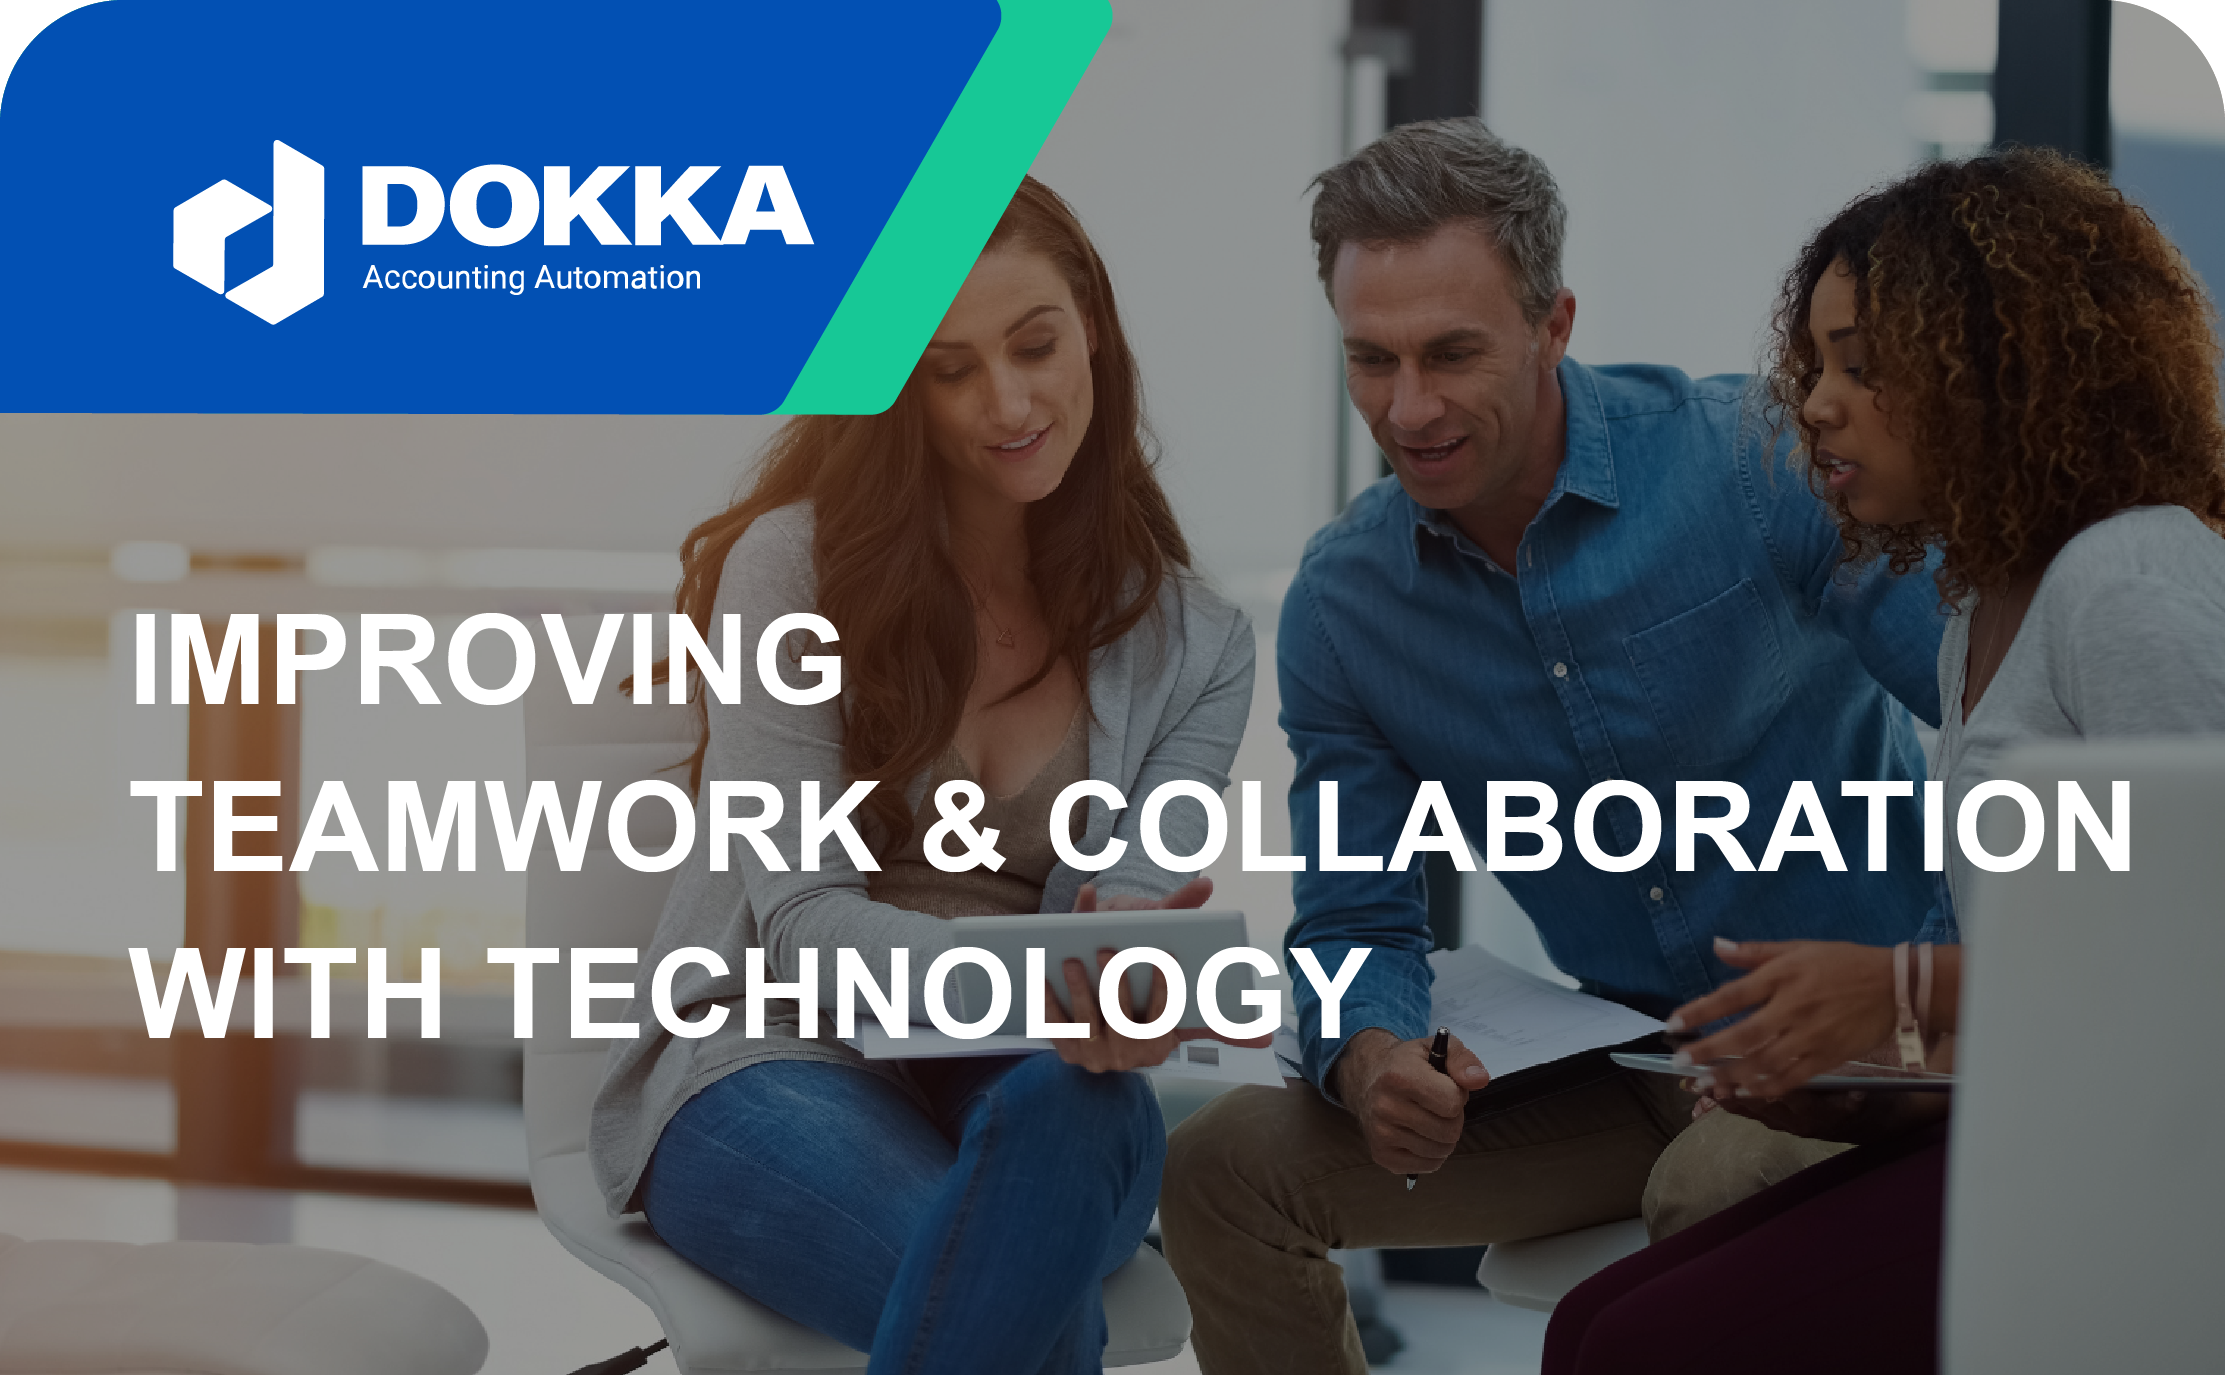 Technology and Teamwork